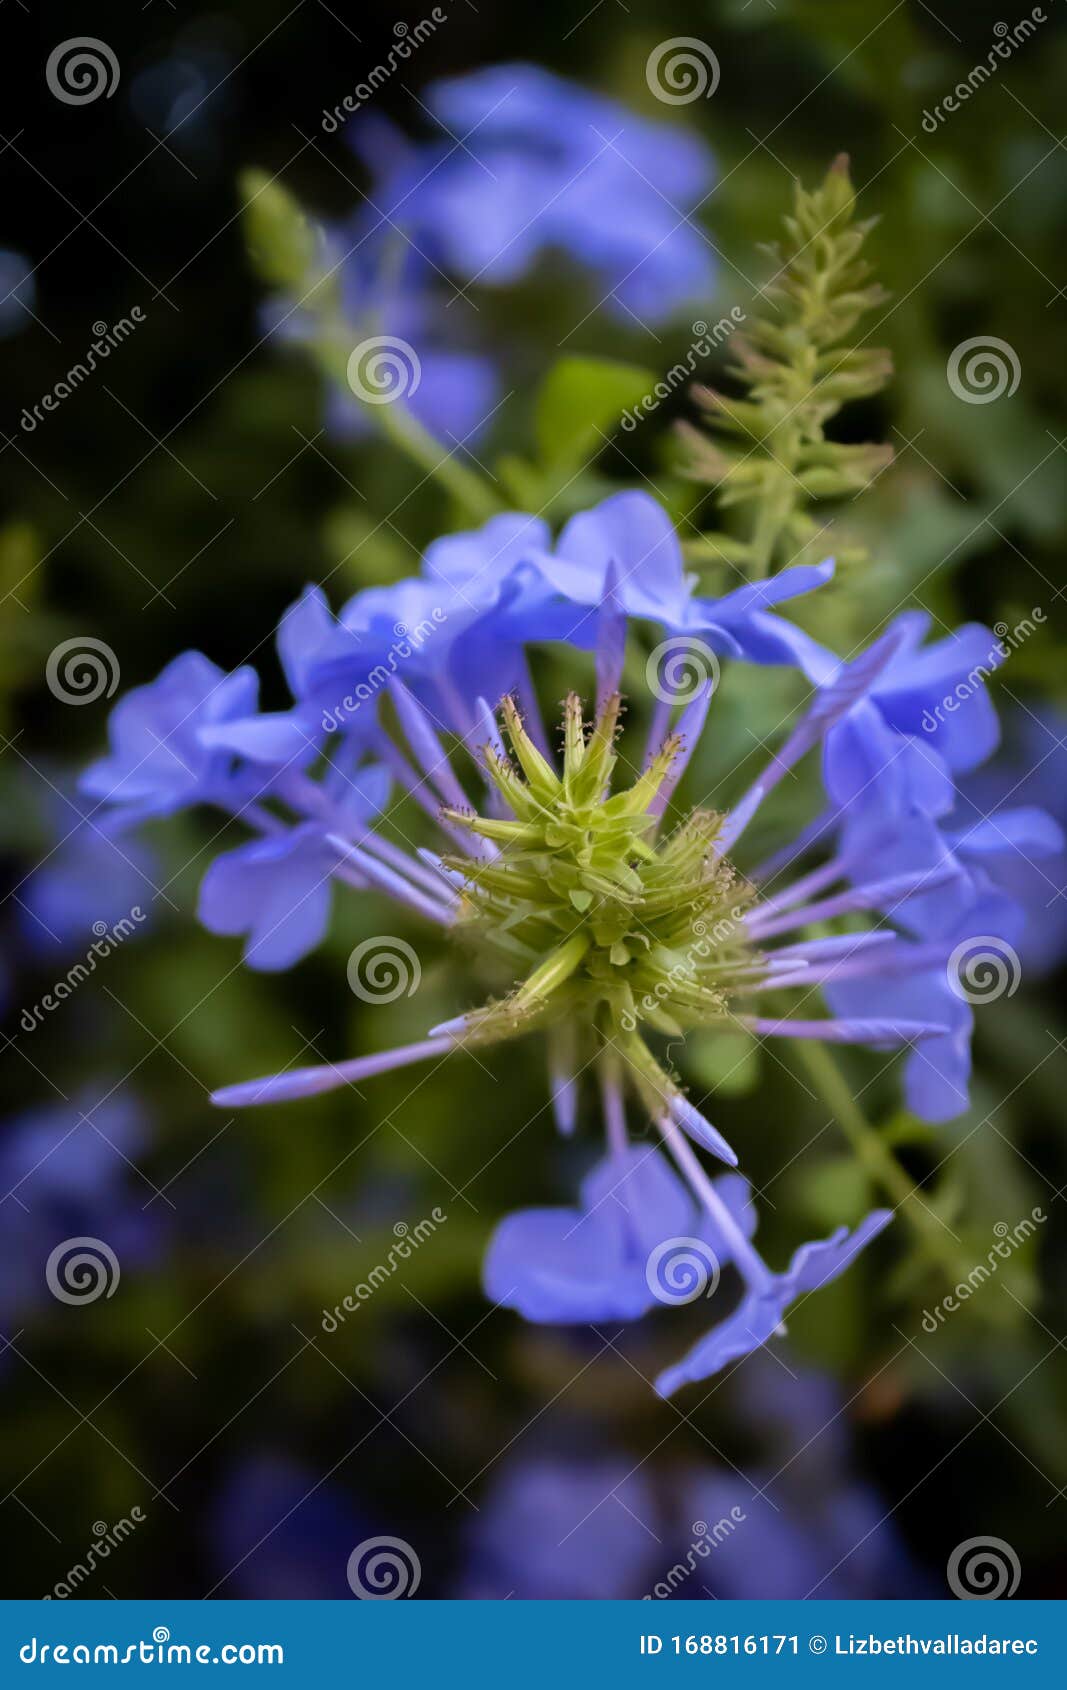 beautiful detail of blue jasmine